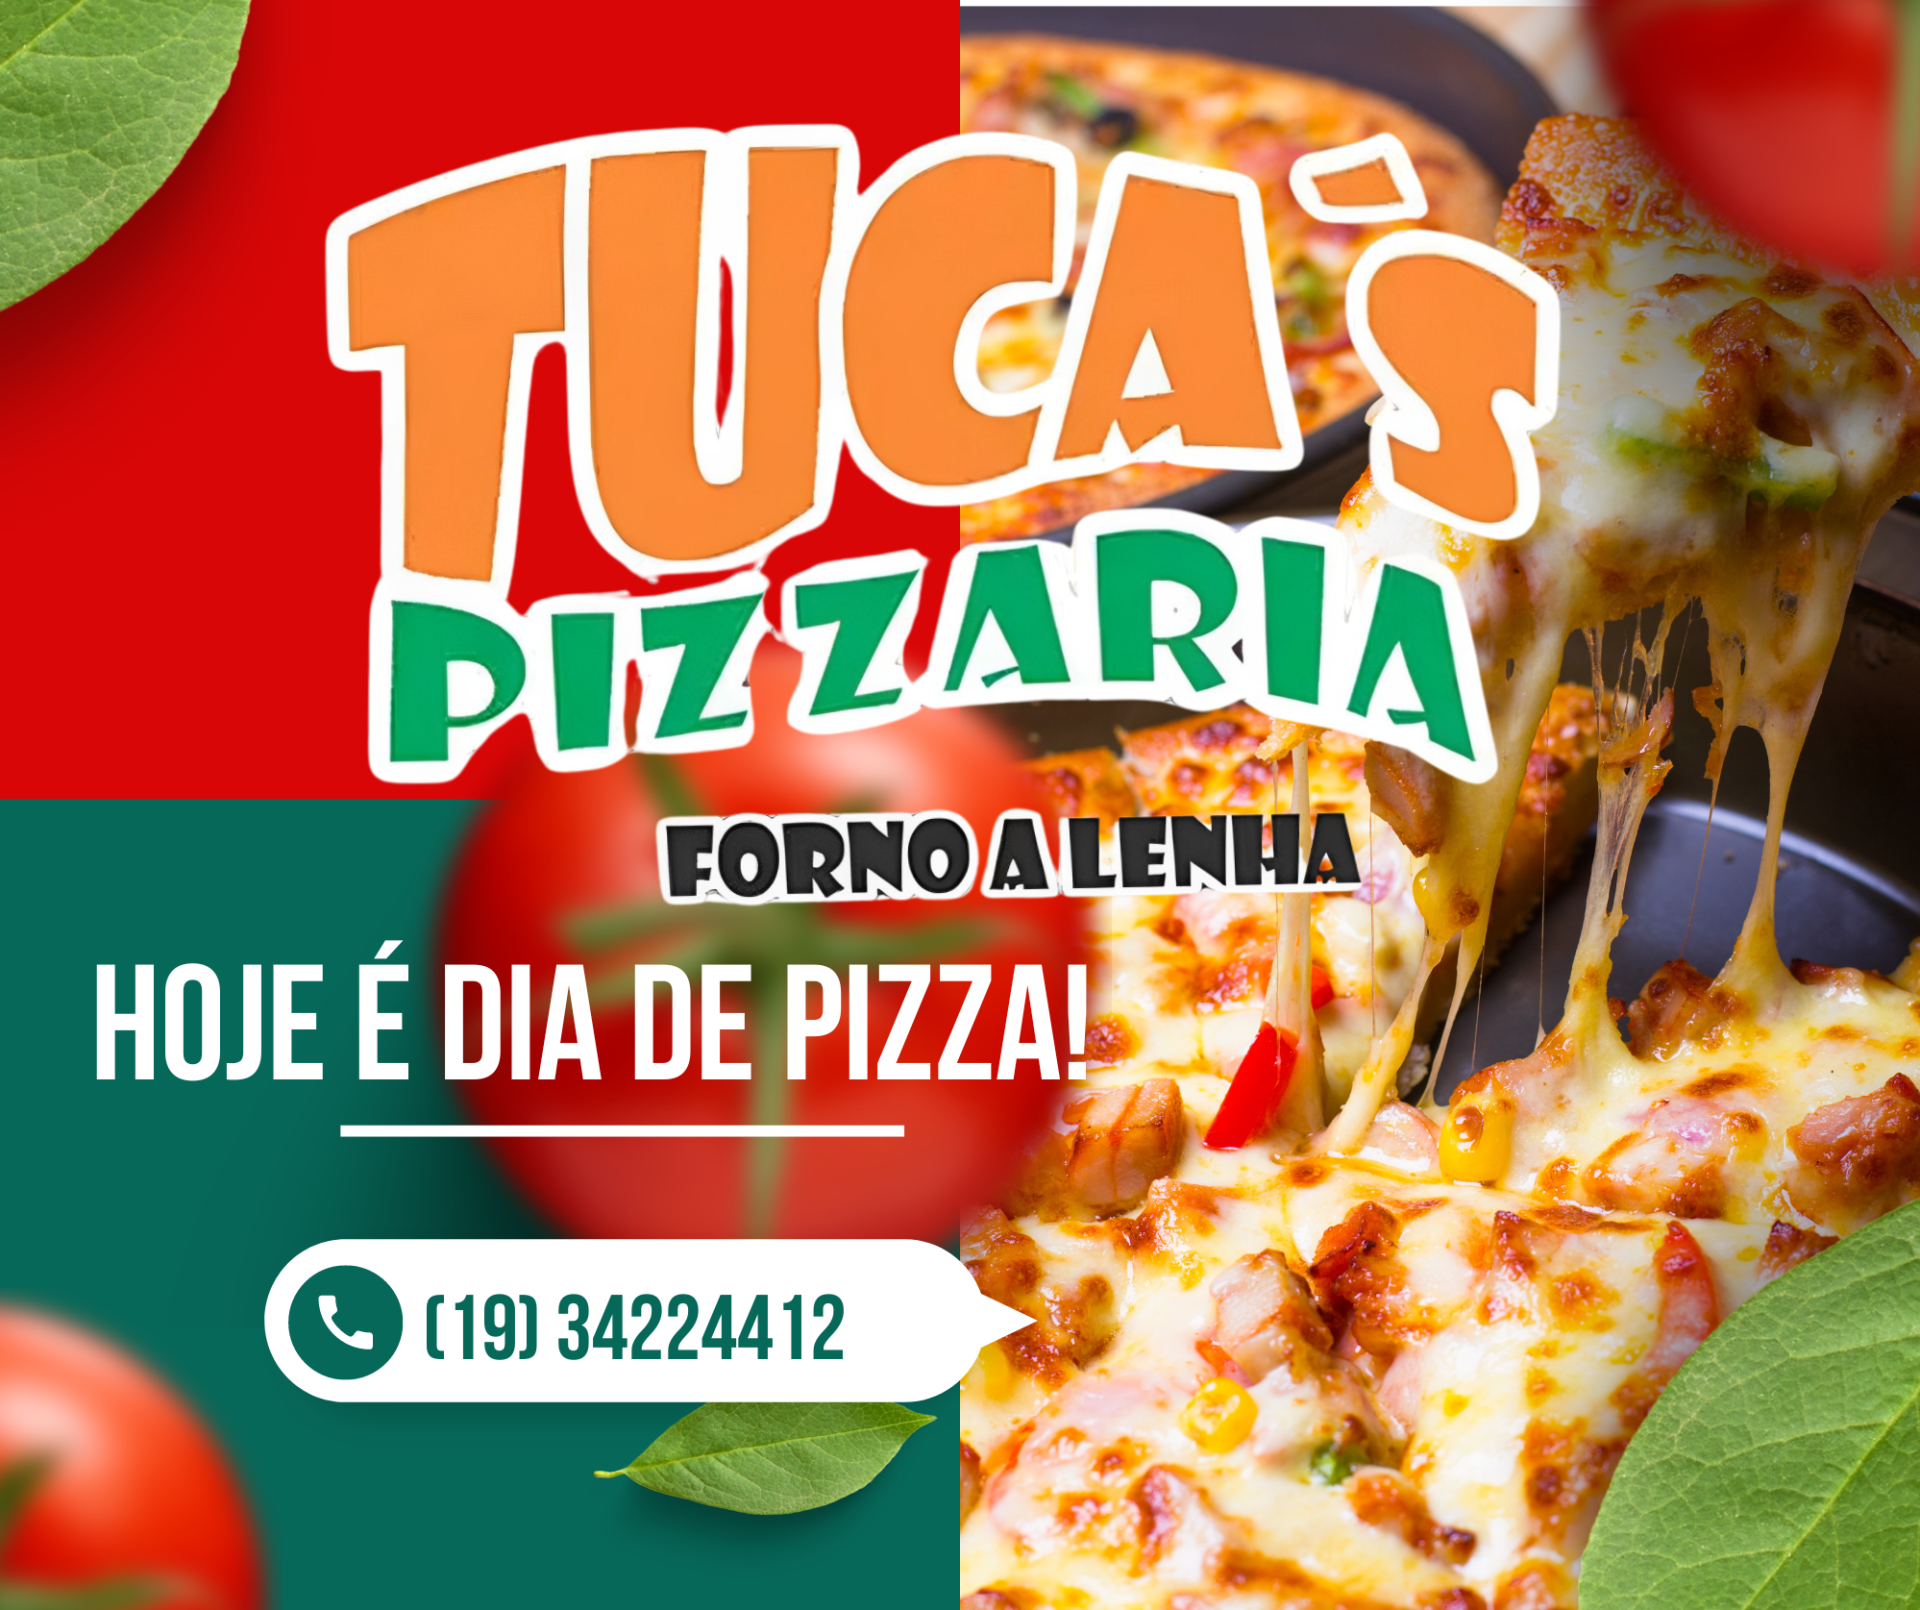 Tucas Pizzaria aaa